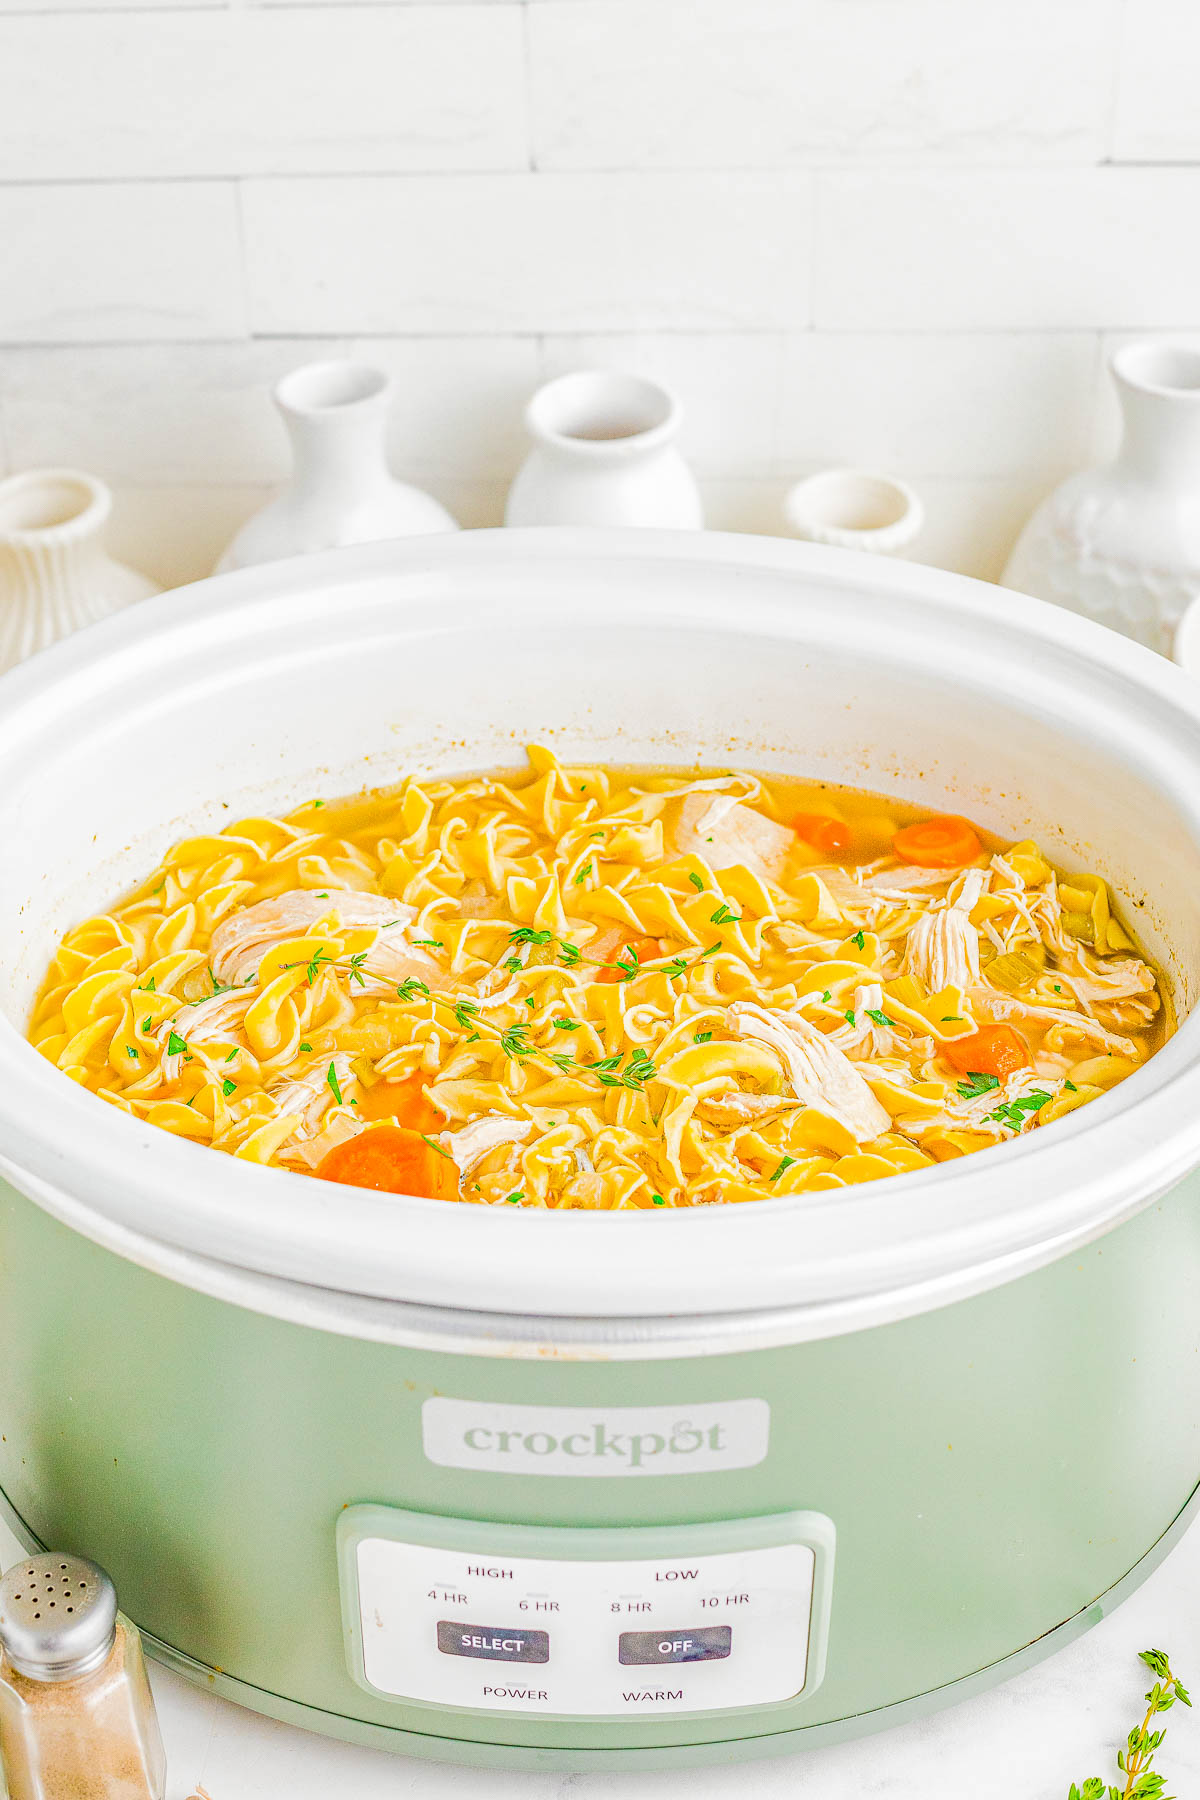 Crockpot Chicken Soup - Slow Cooker Chicken Noodle Soup